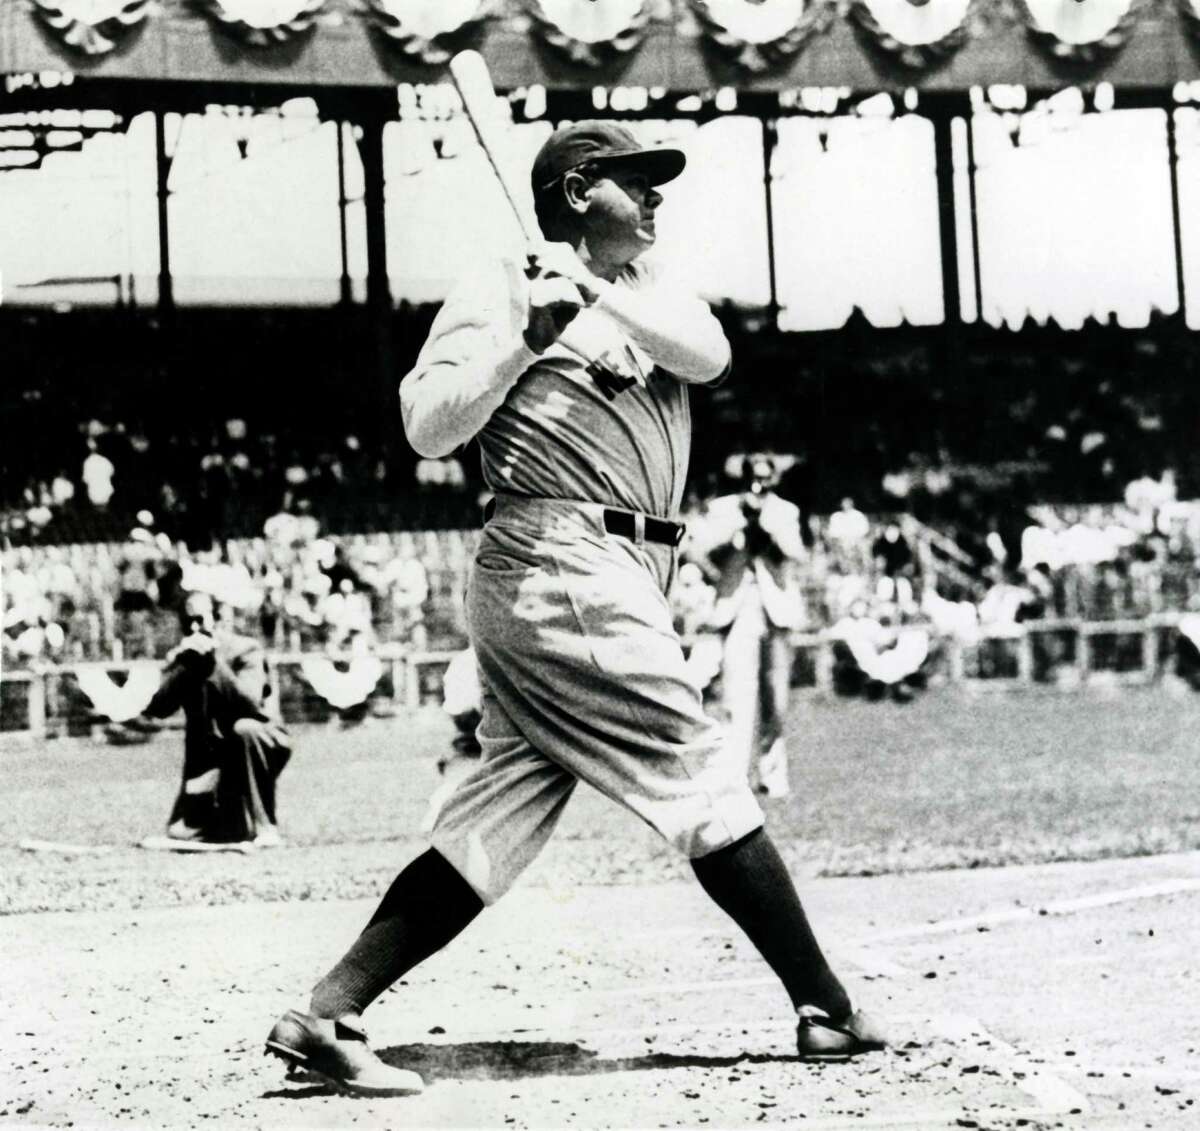 Babe Ruth New York Yankees 35